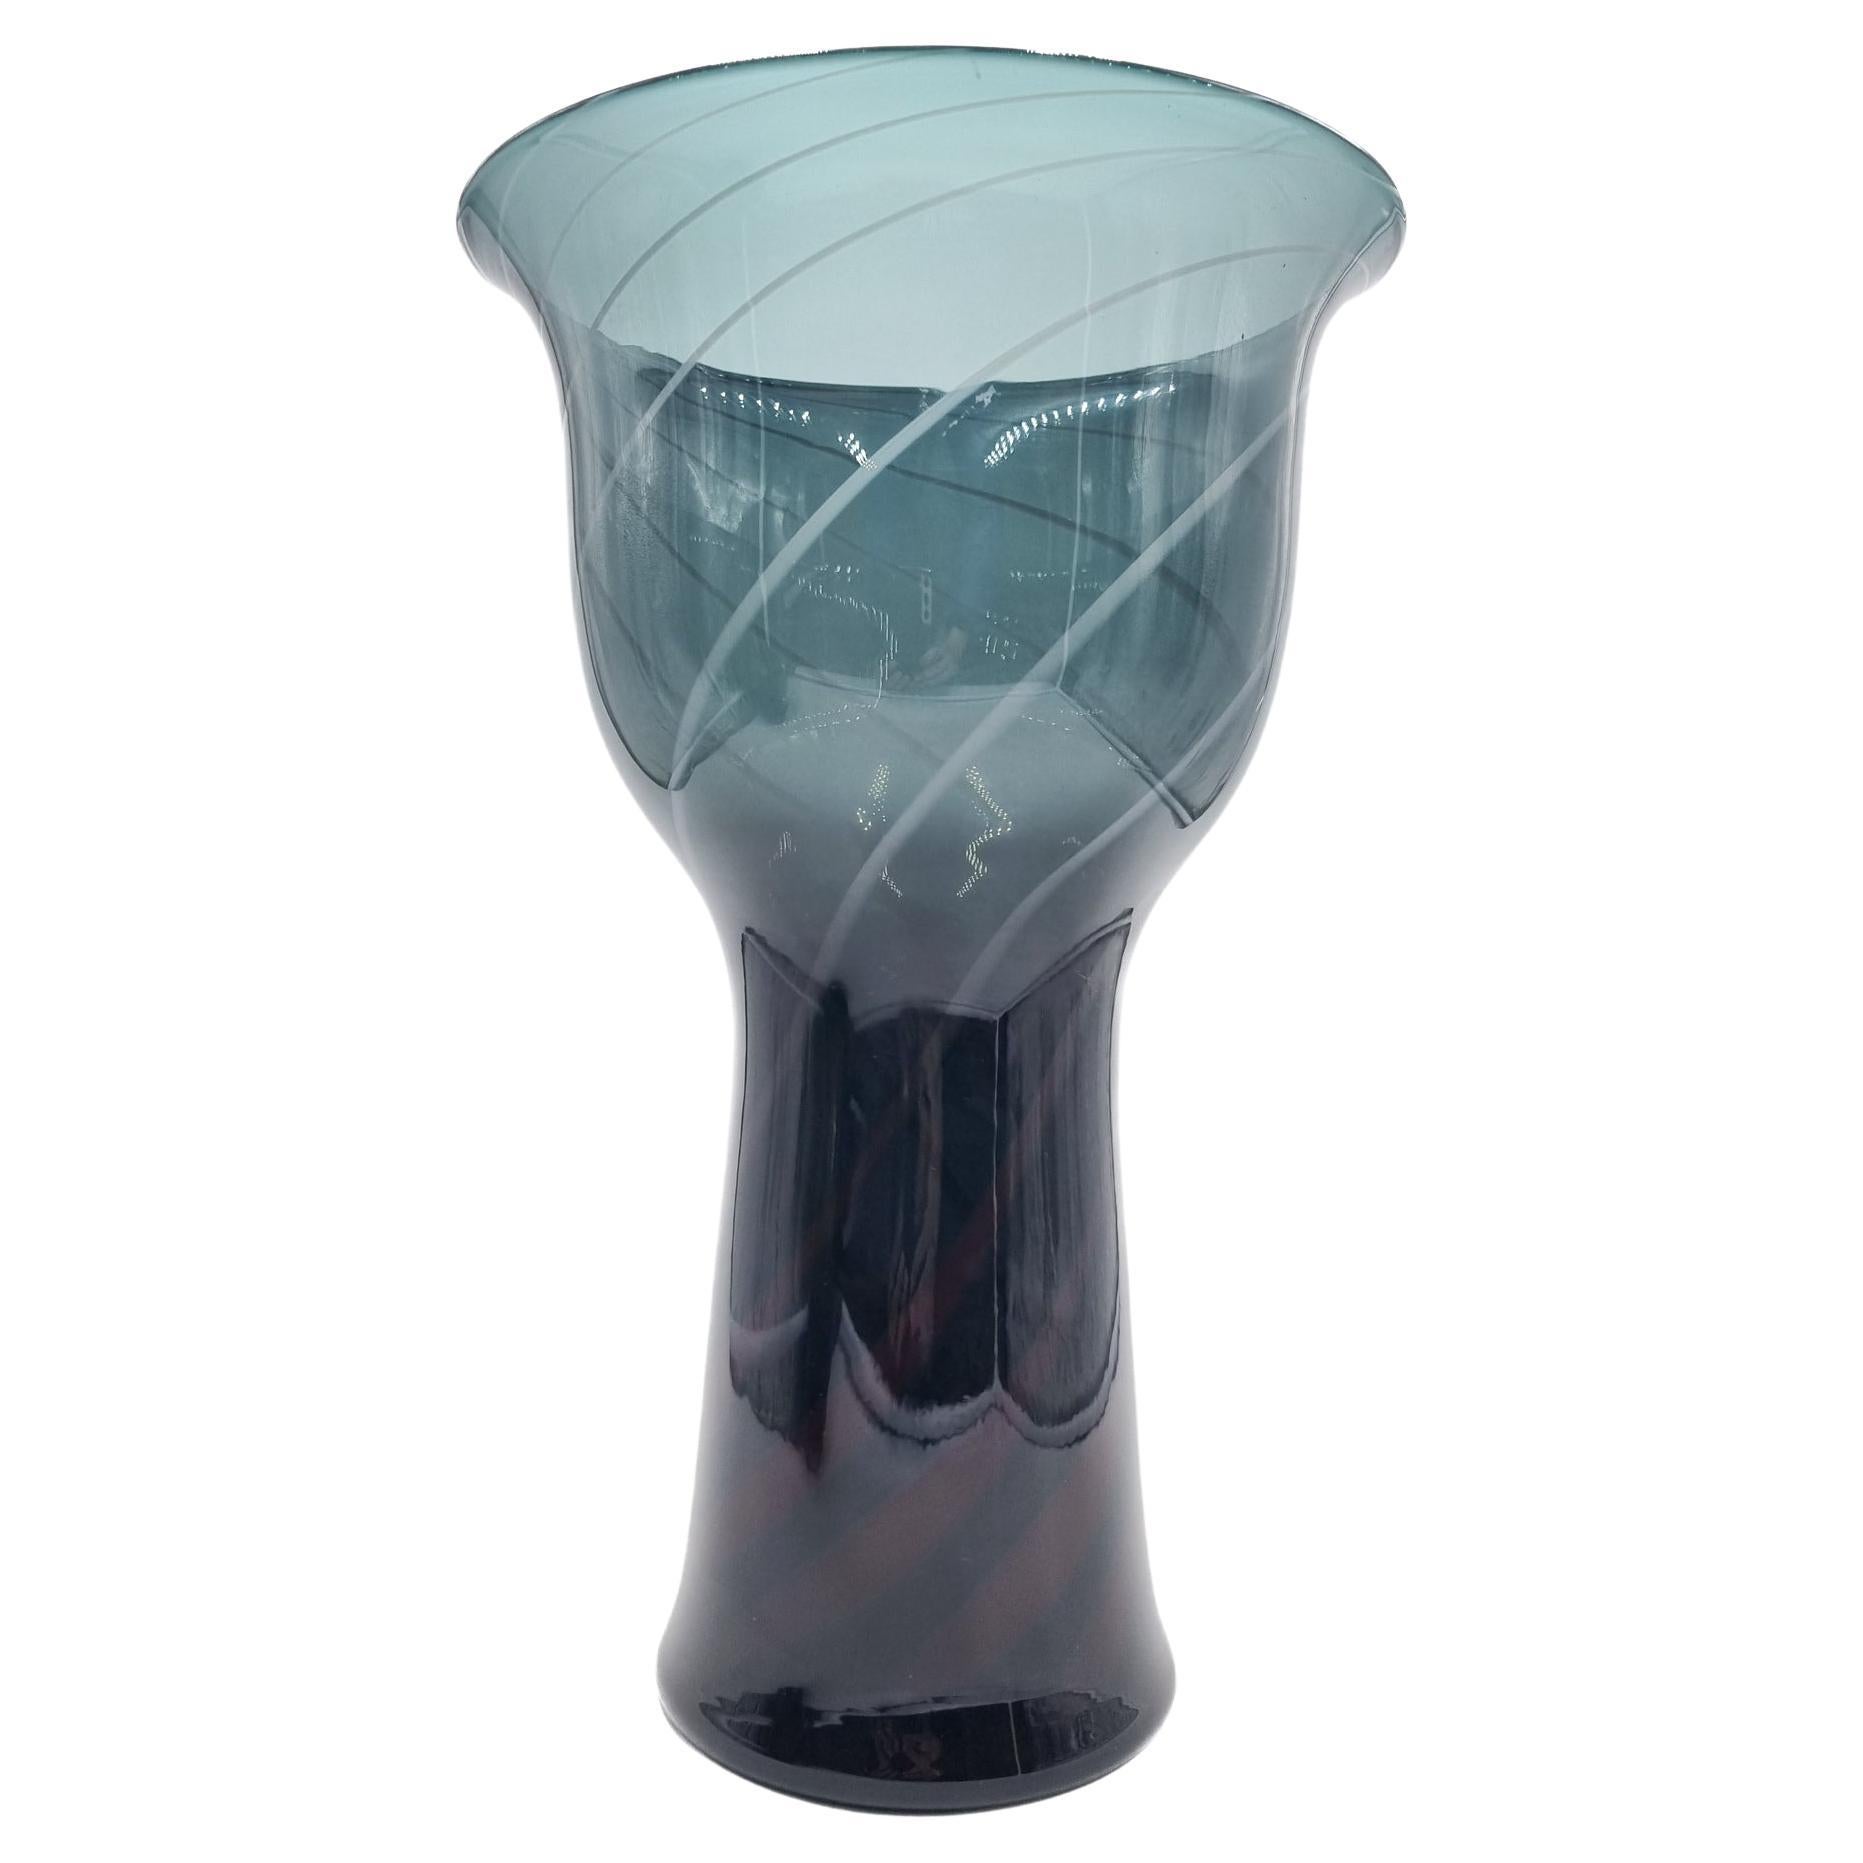 Murano Glass Vase by Ove Thorsen and Brigitta Karlsson for Venini 1970s